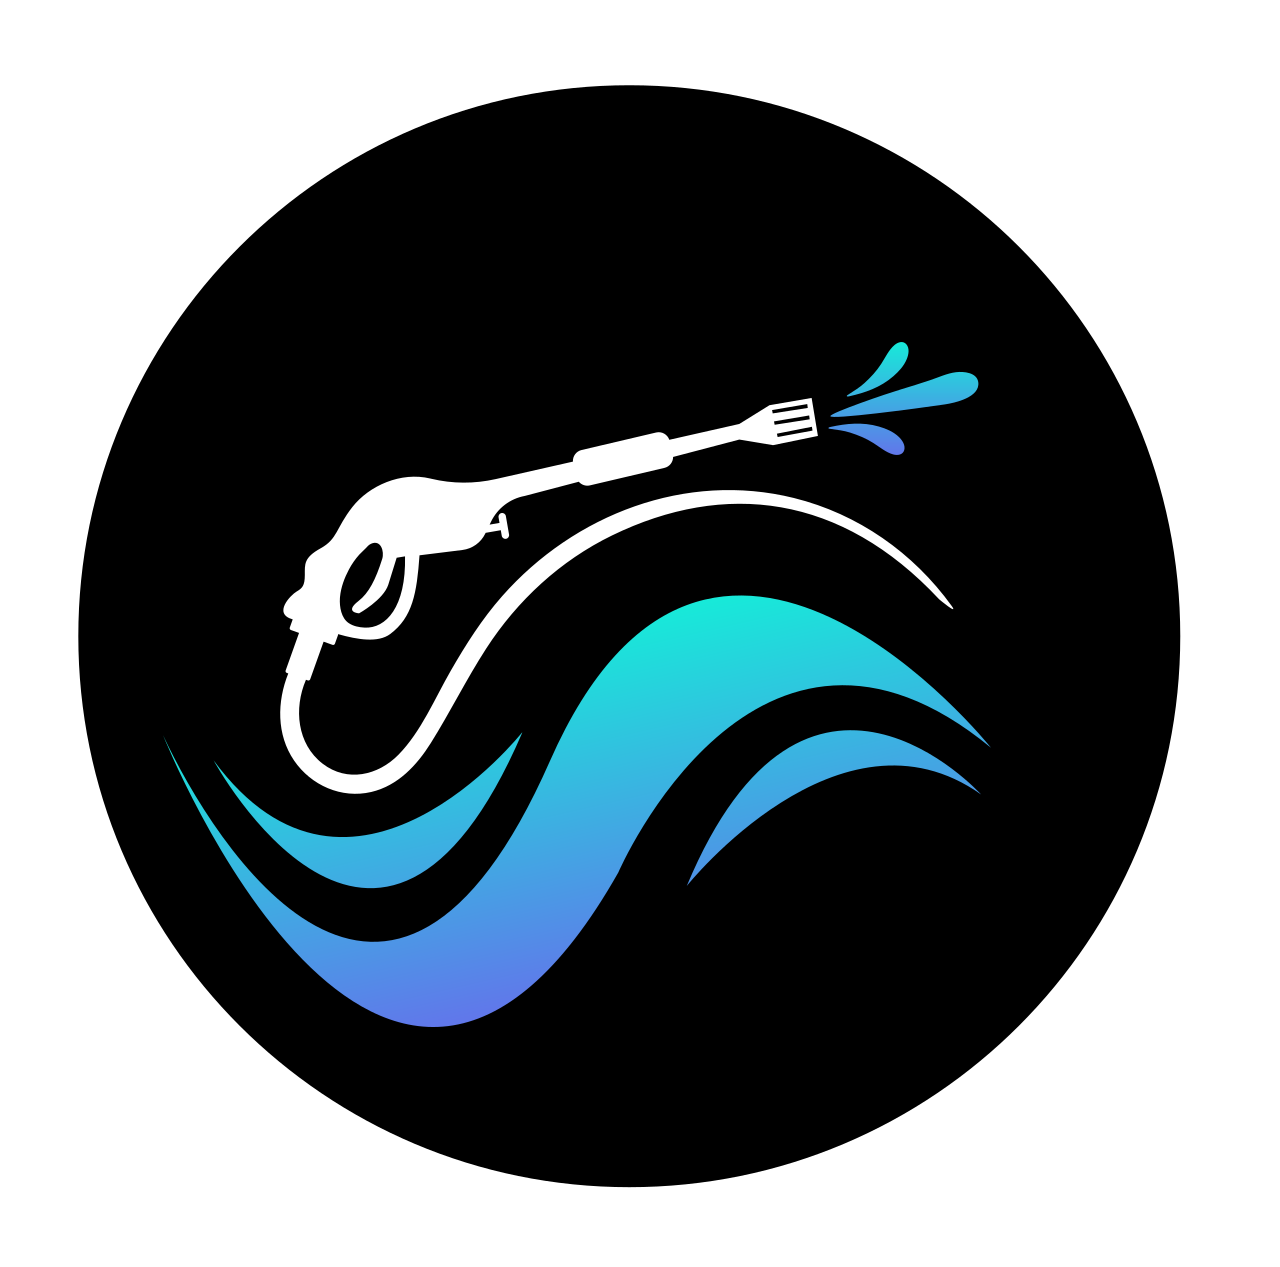  GUNNAR'S GLEAMING SERVICES 's logo